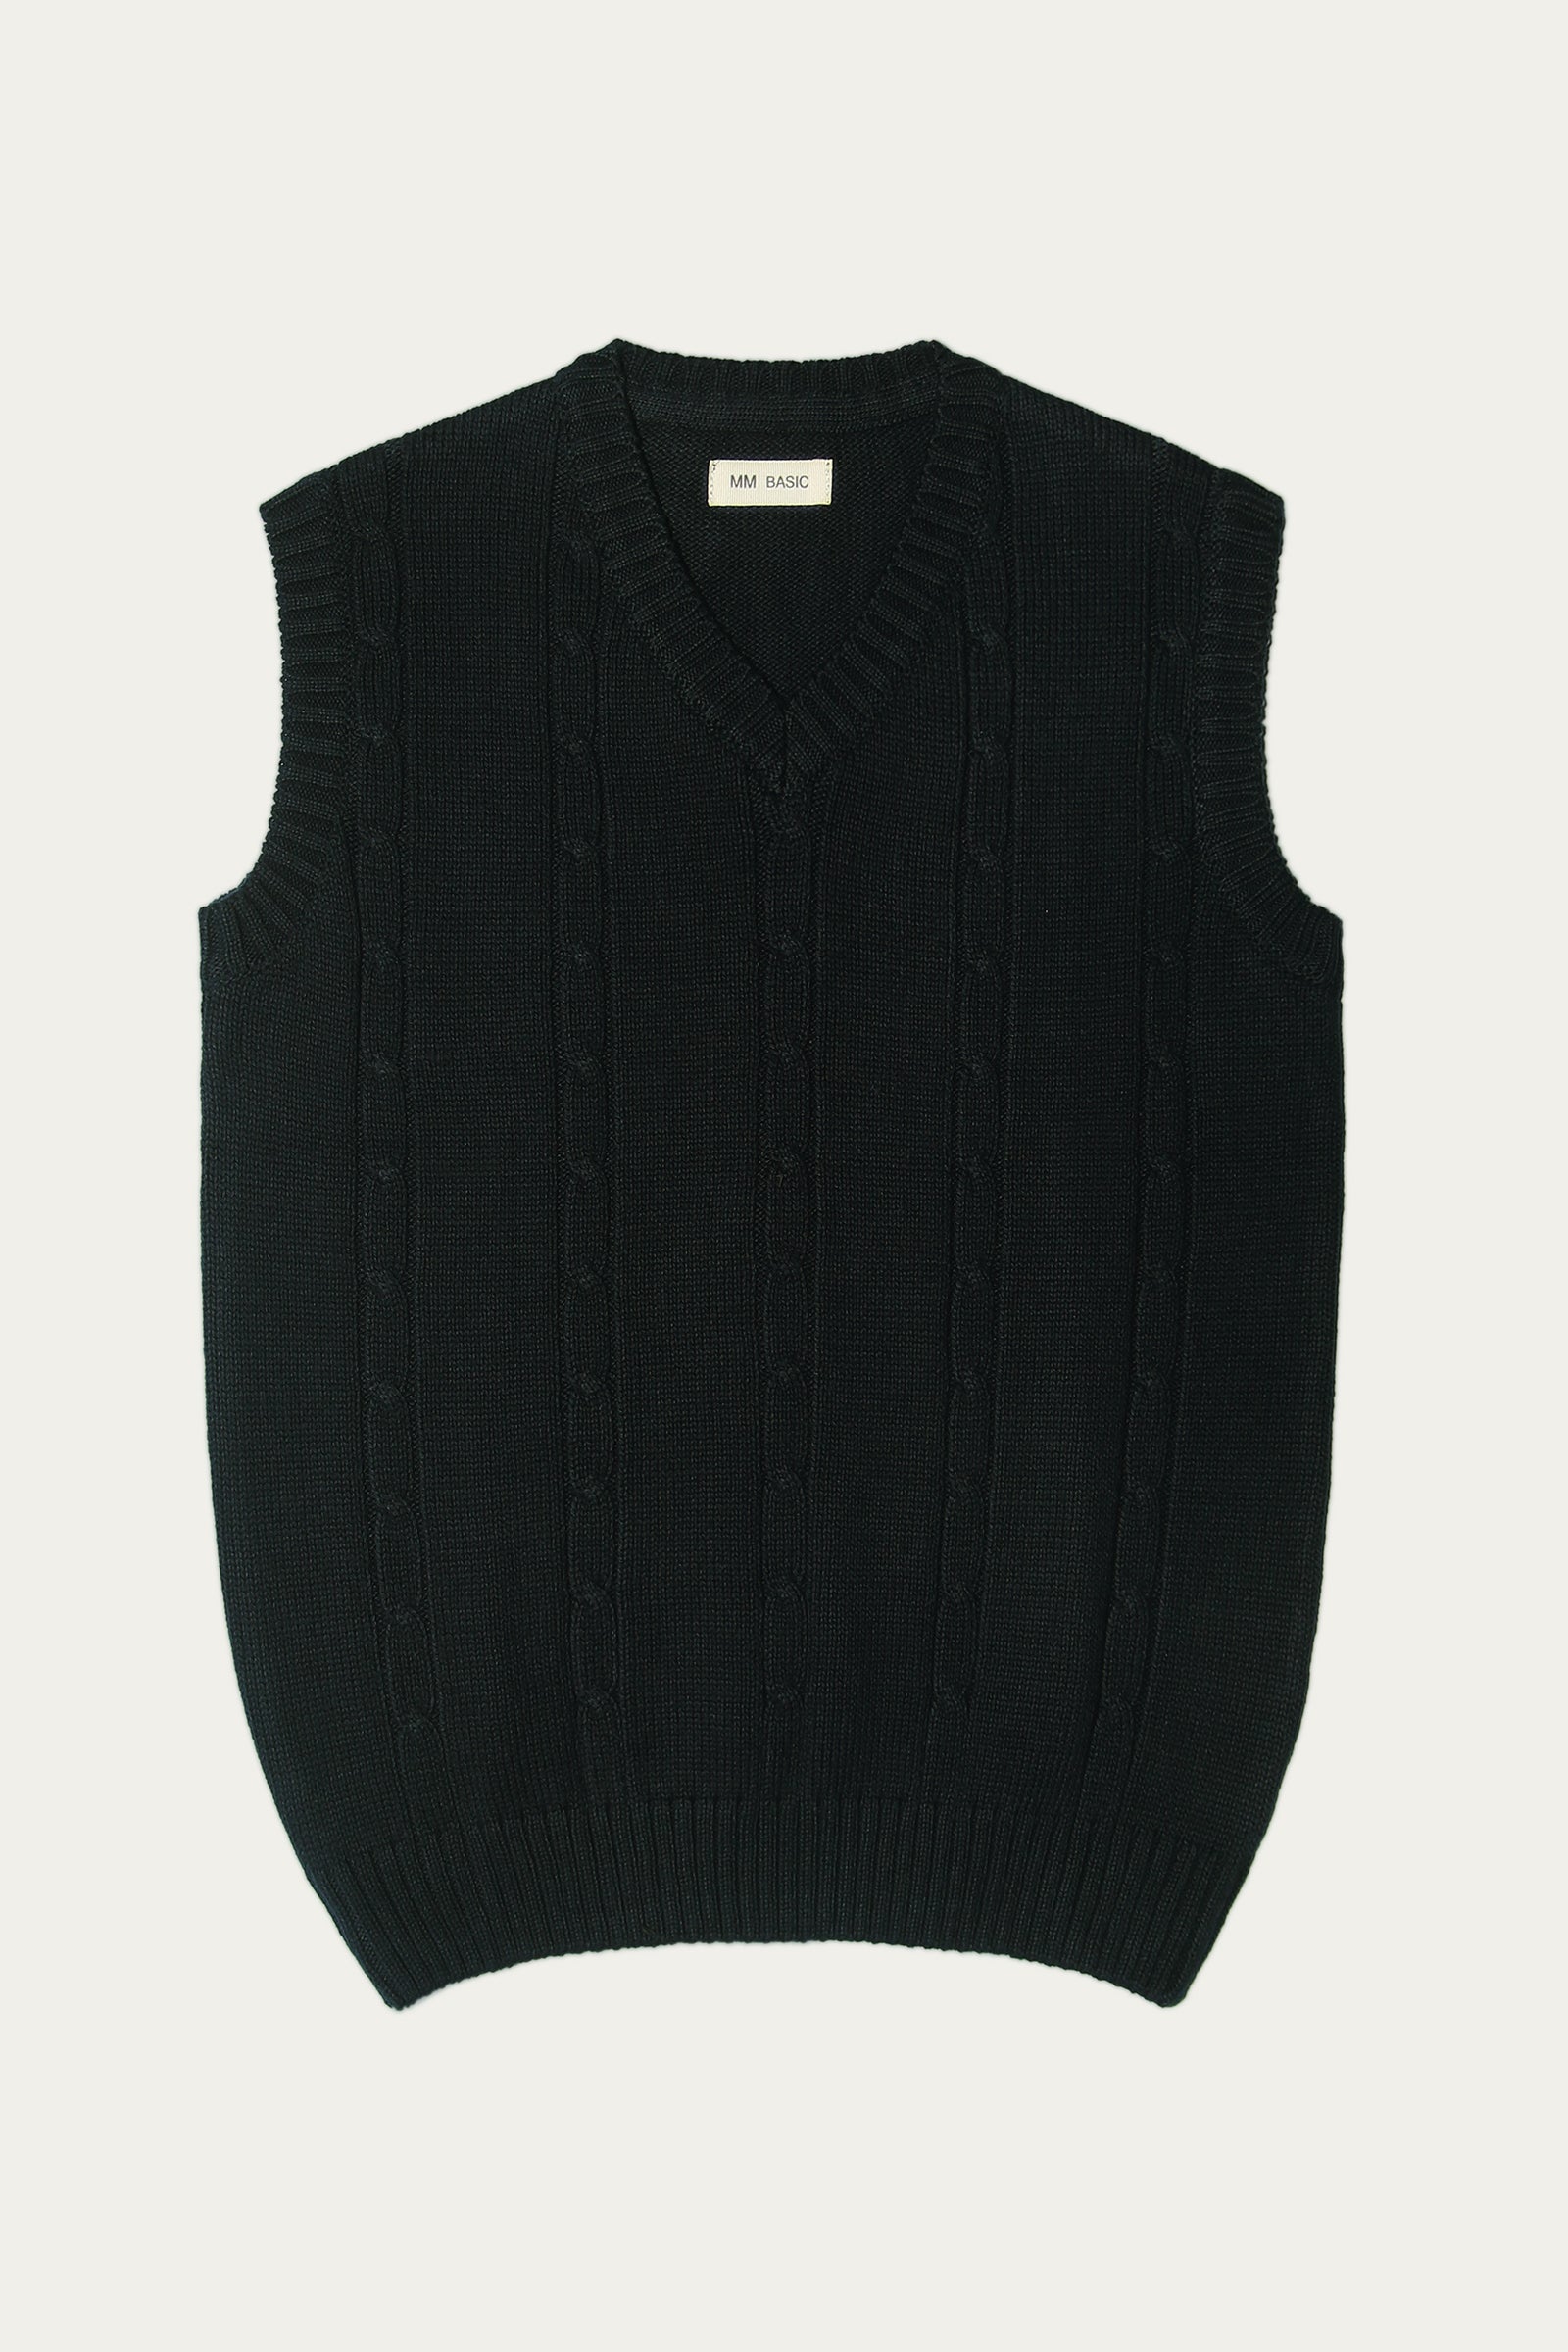 Sleeveless Sweater (SS-BASIC-SL-08)